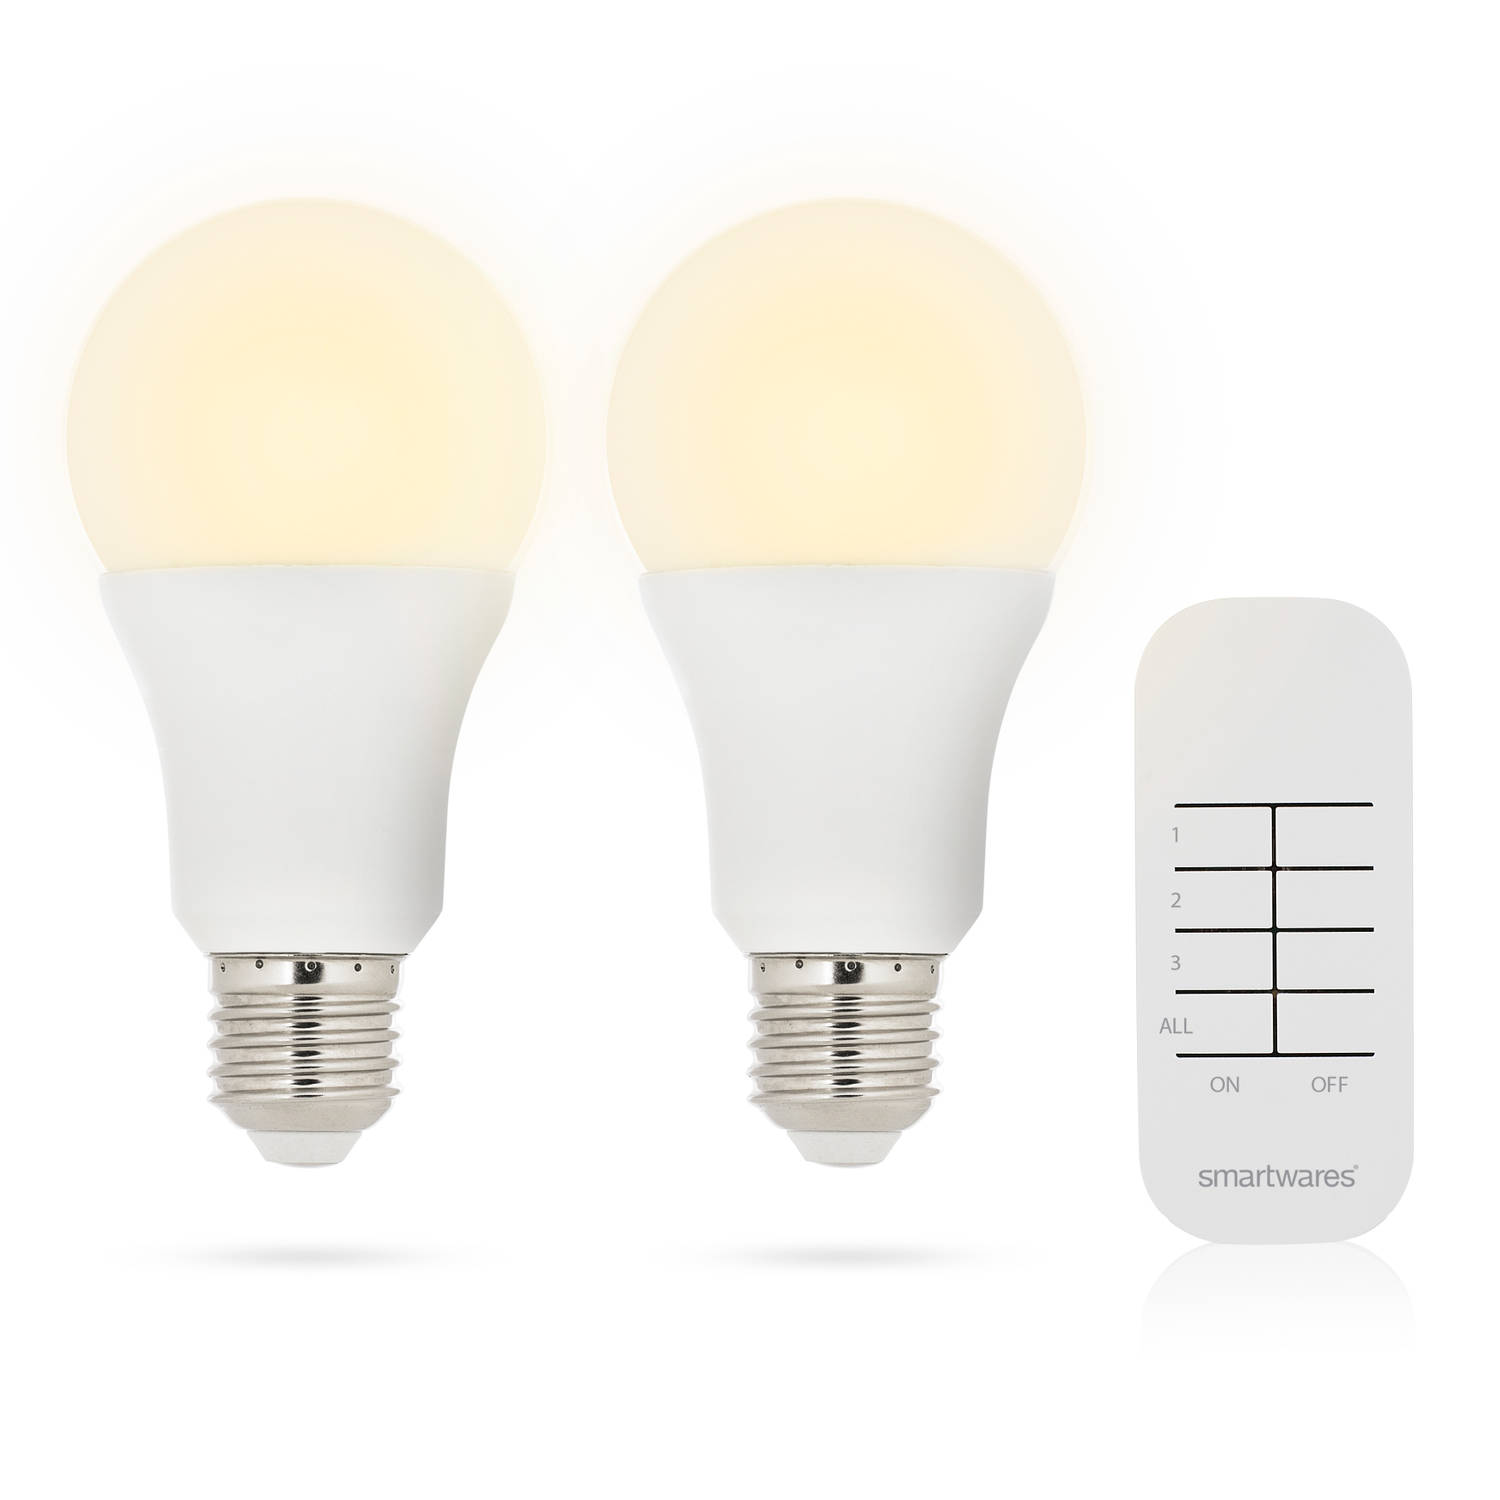 rekenmachine dek apotheker Smartwares dimbare slimme verlichting SH4-99551 – 2x 9 W LED lamp -  Smarthome Basic | Blokker